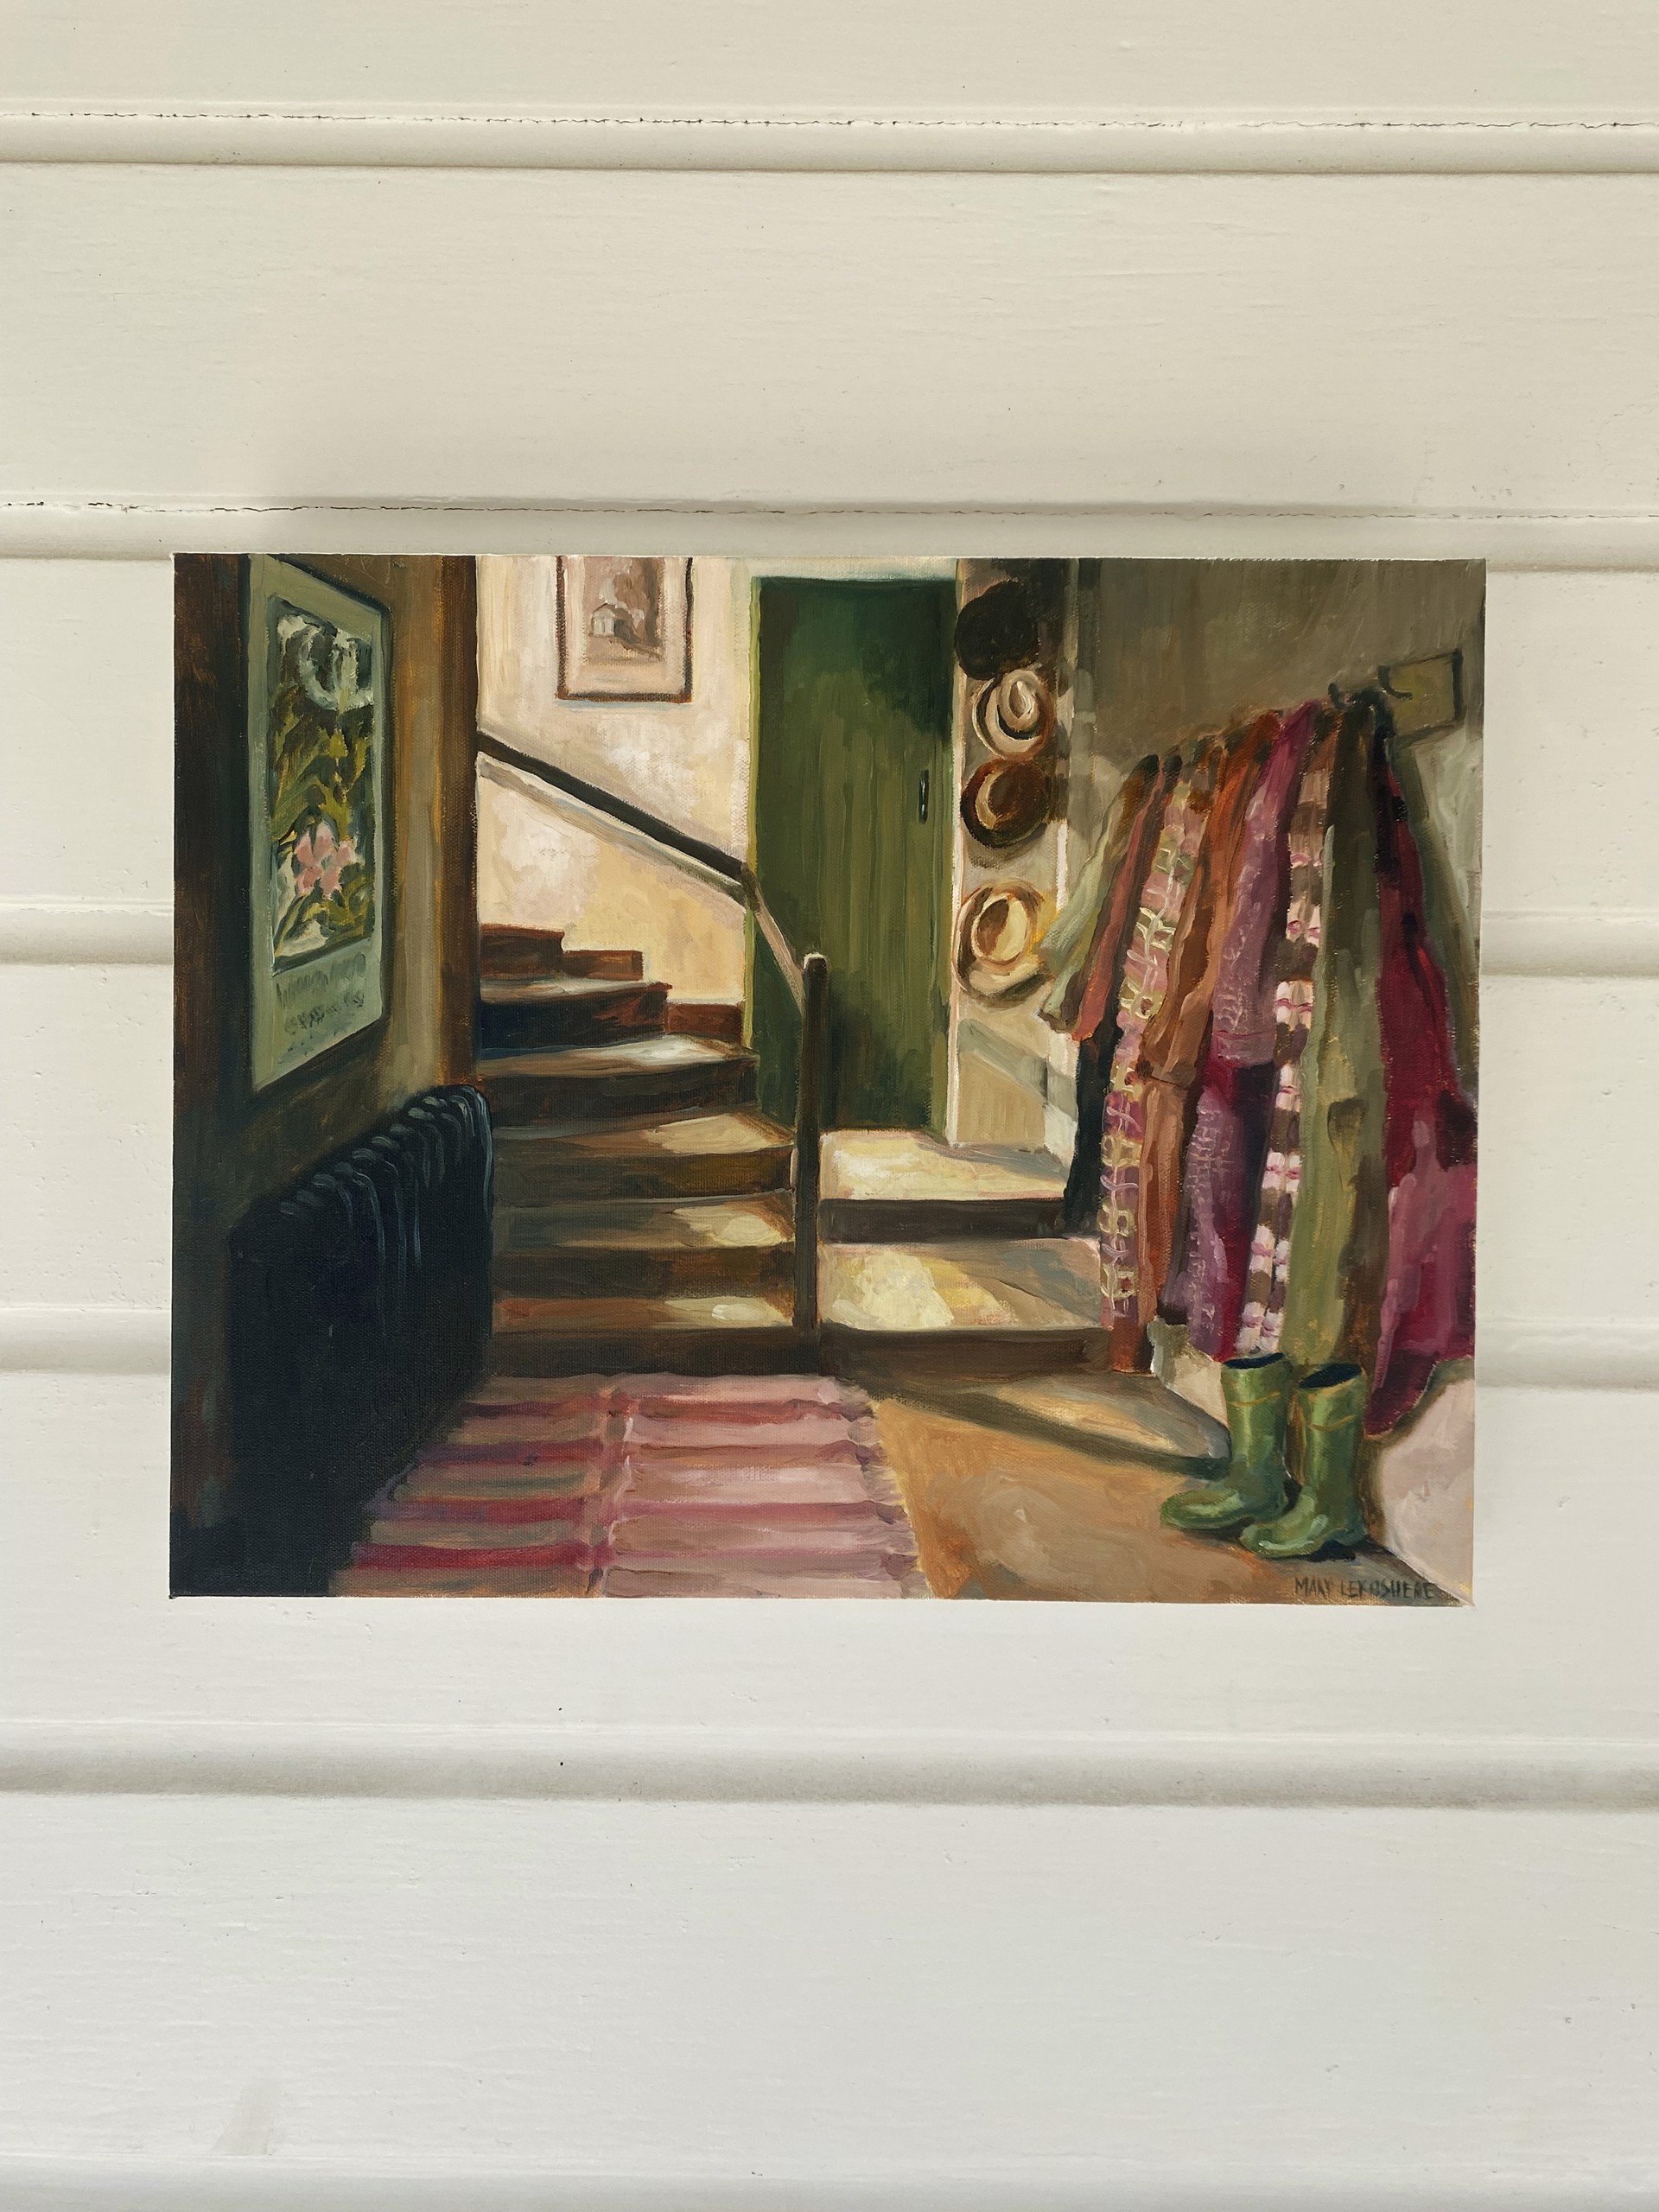 Winter Hallway by Mary Lekoshere